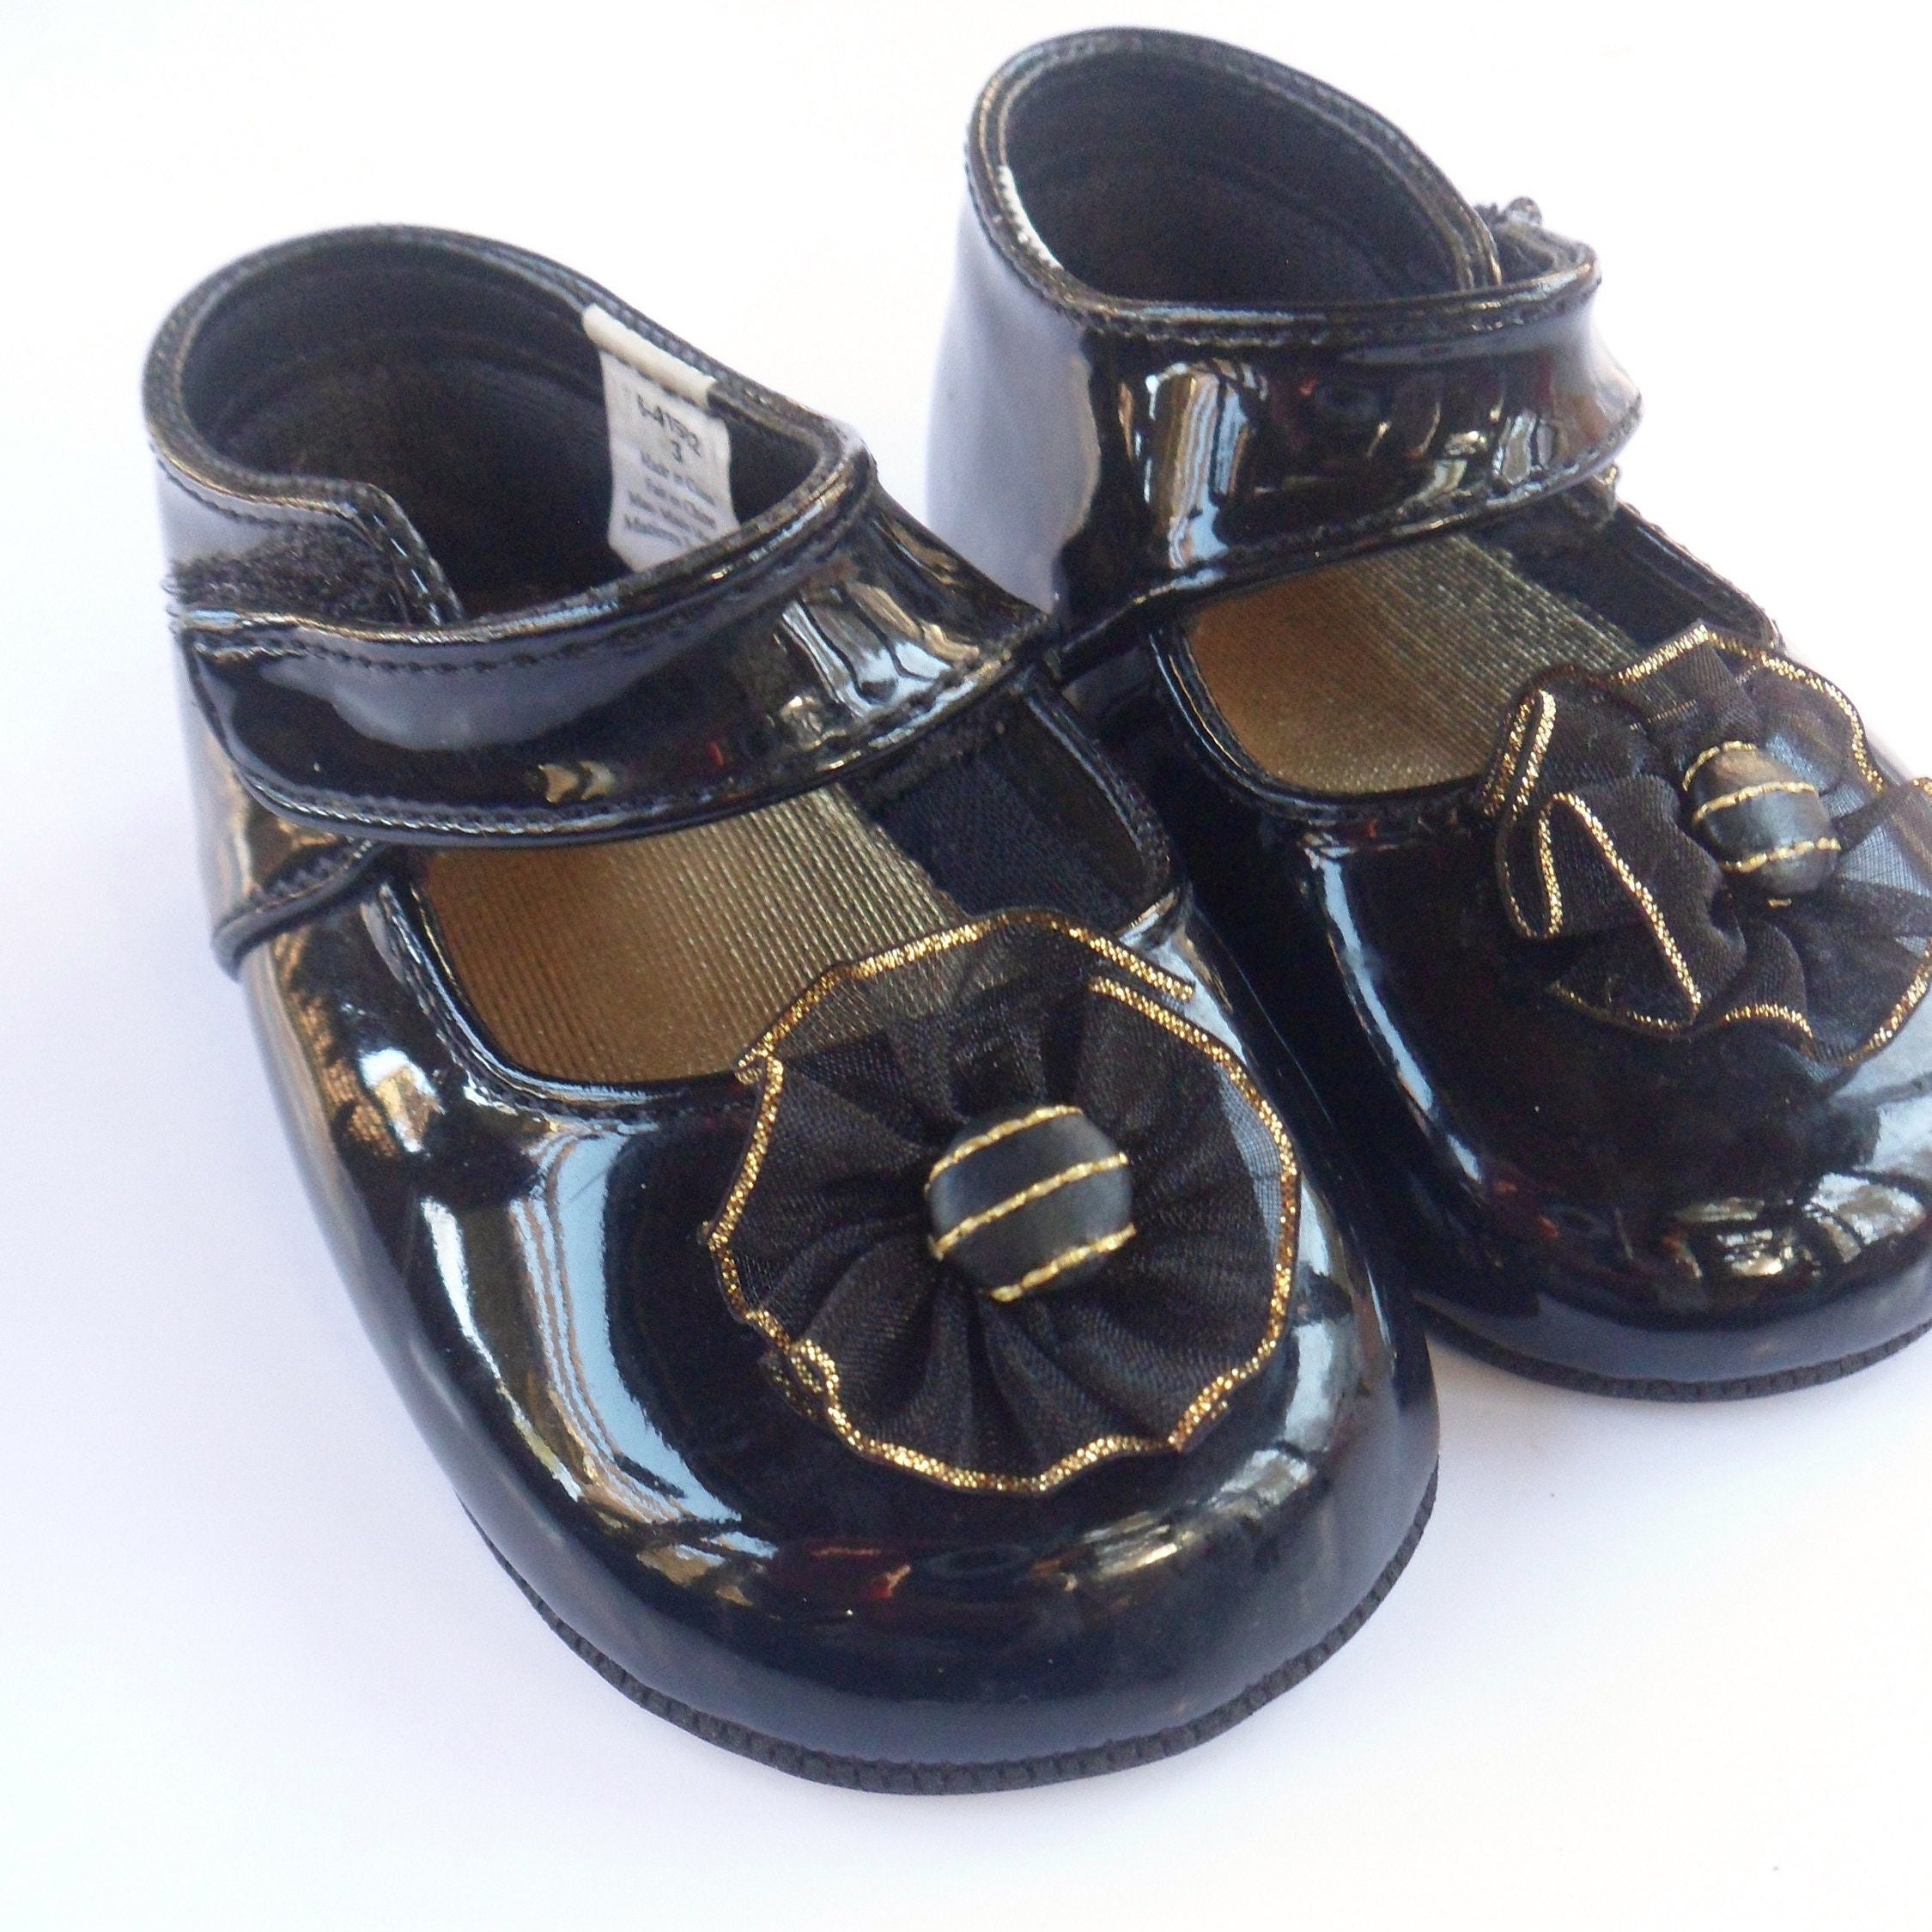 Schoenen Meisjesschoenen Mary Janes Antique Black Leather Children's Toddler Shoes 